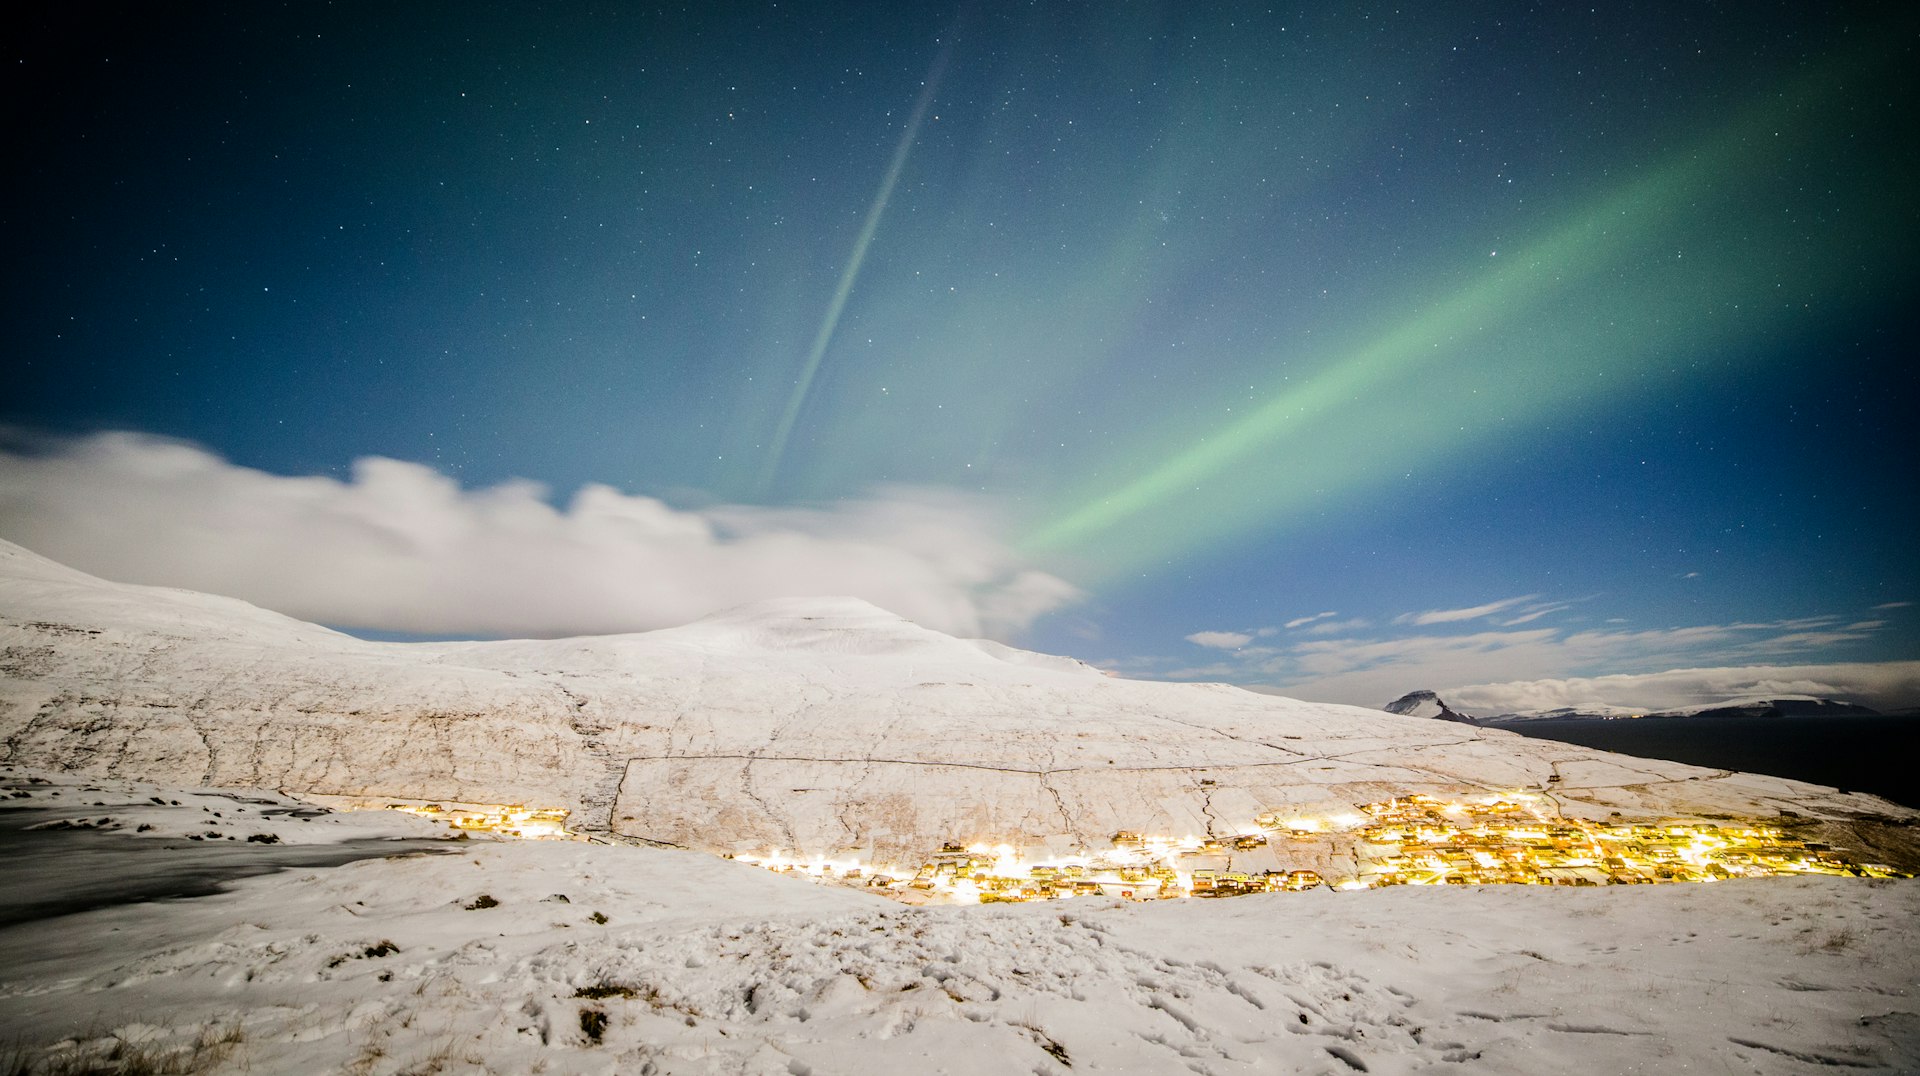 Faroe Islands Snow and Northern Lights